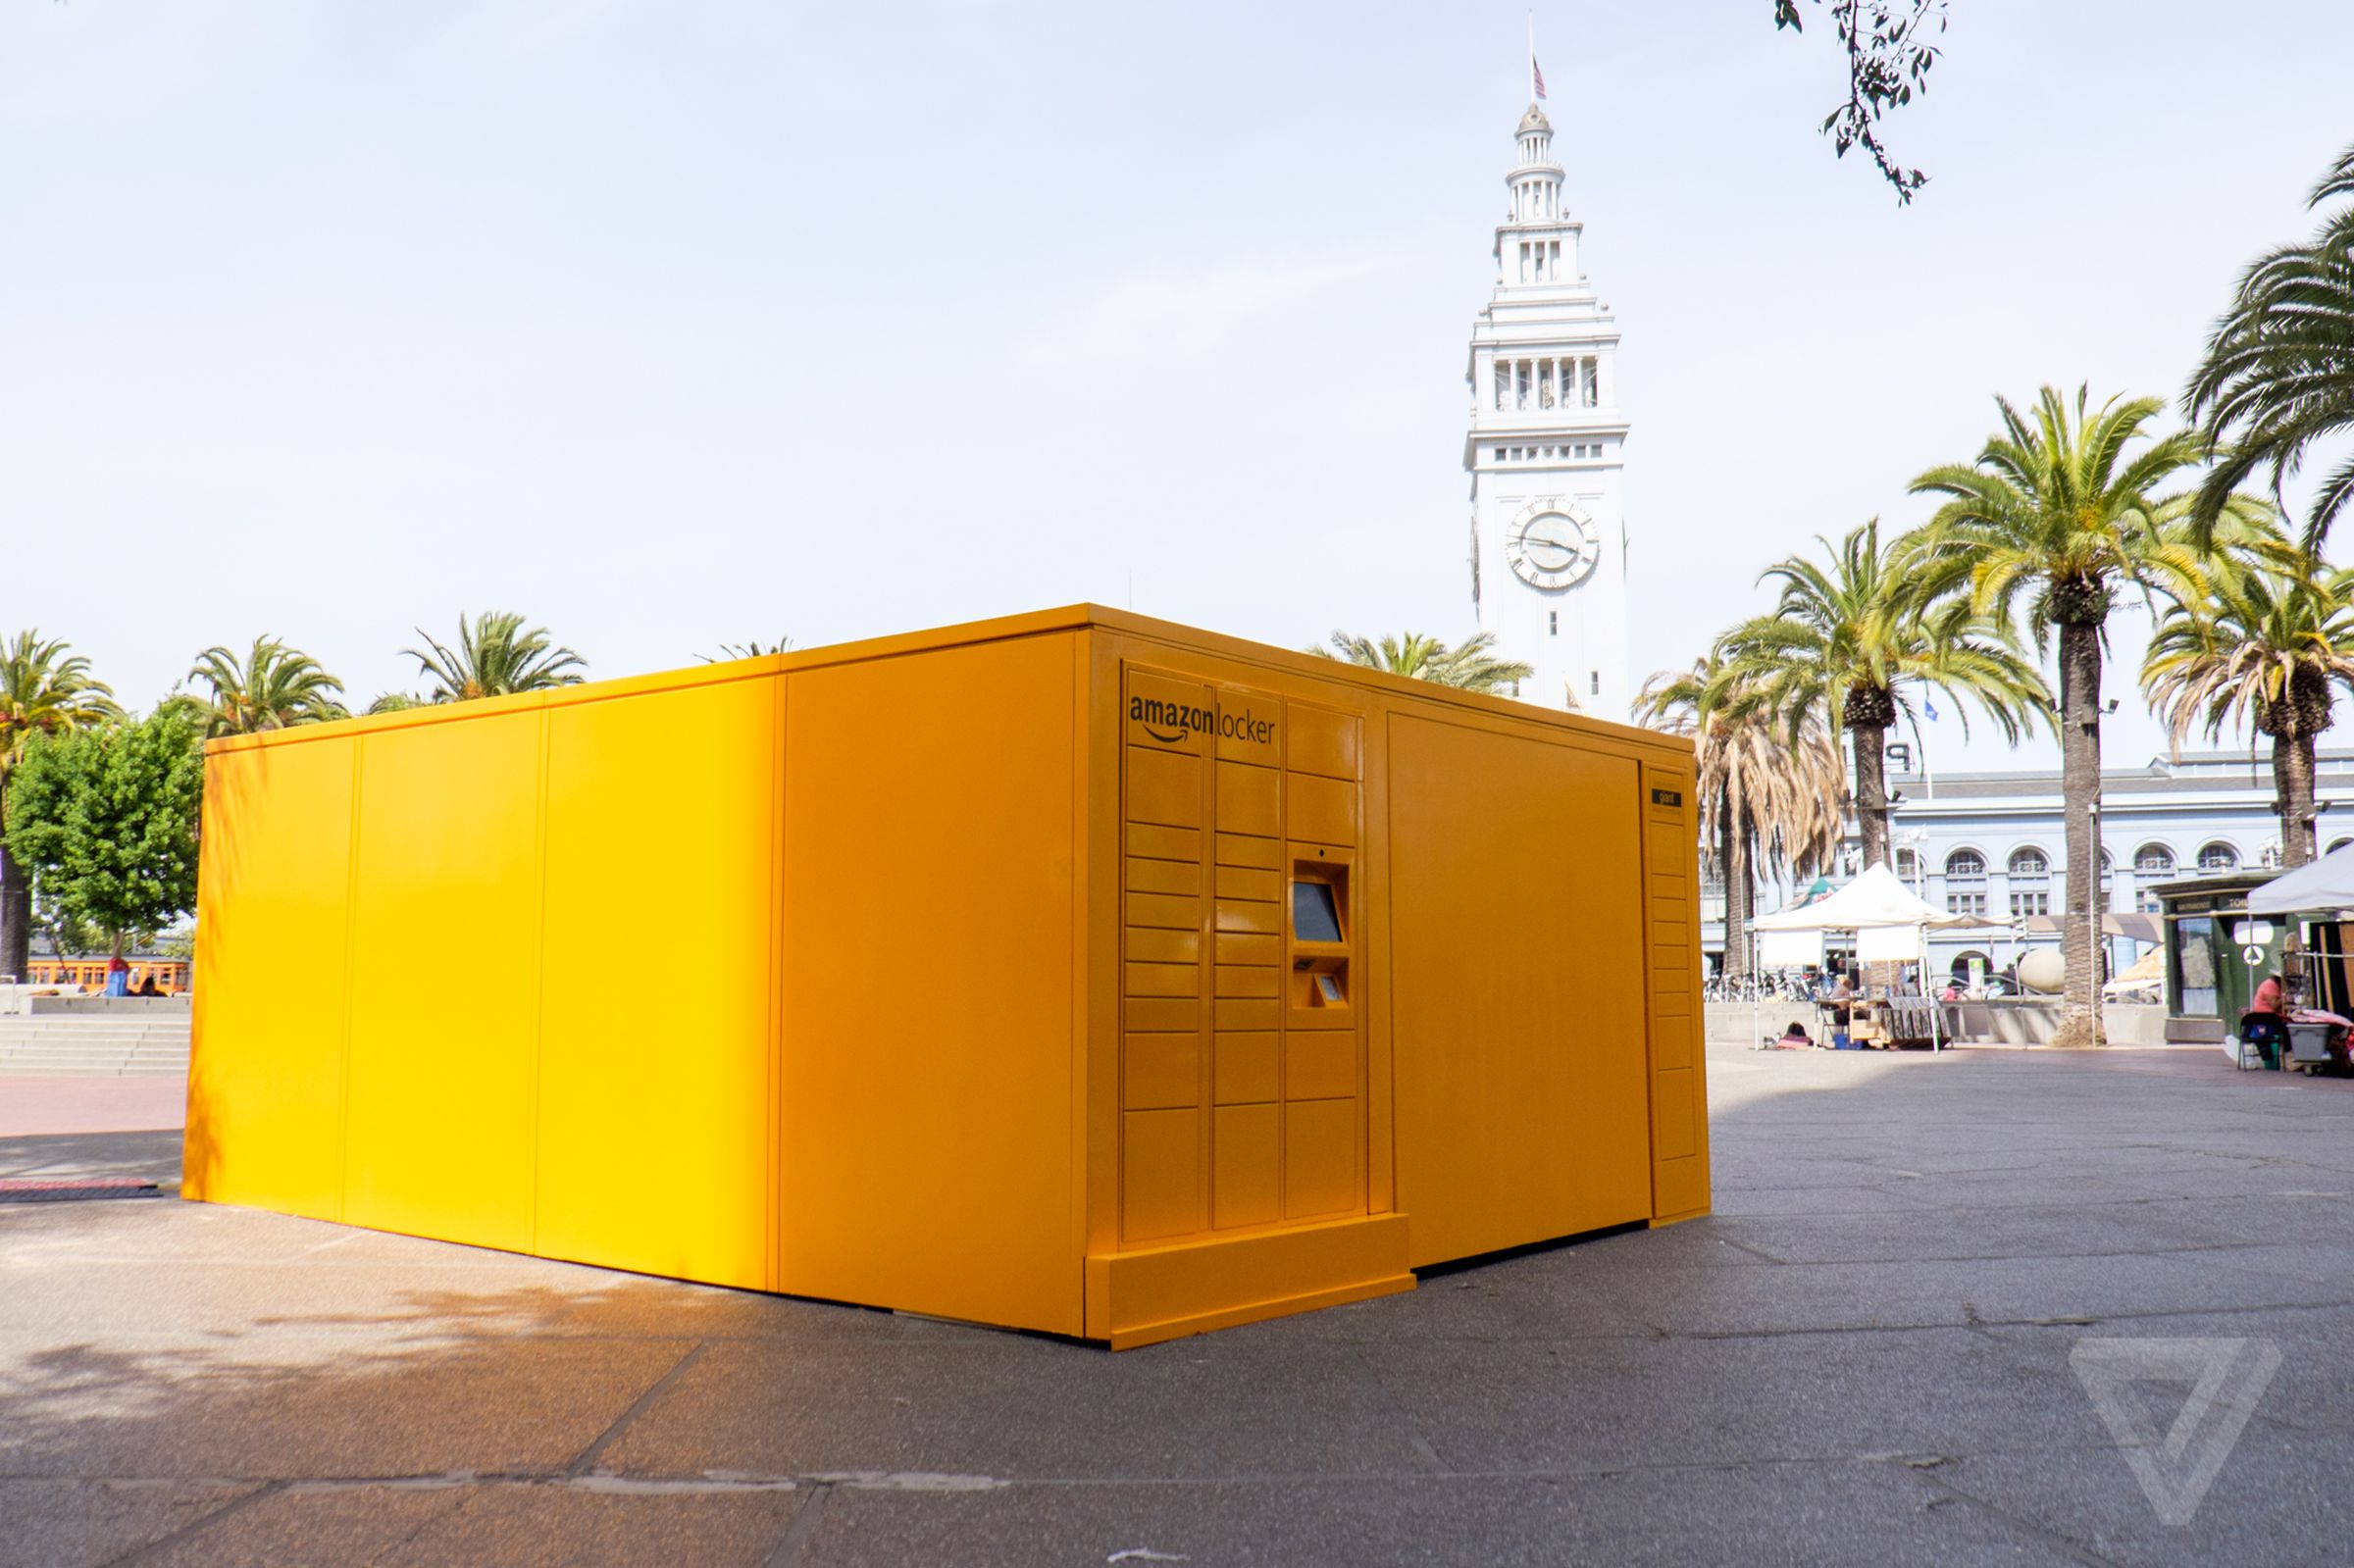 Amazon's 'Giant' locker in San Francisco